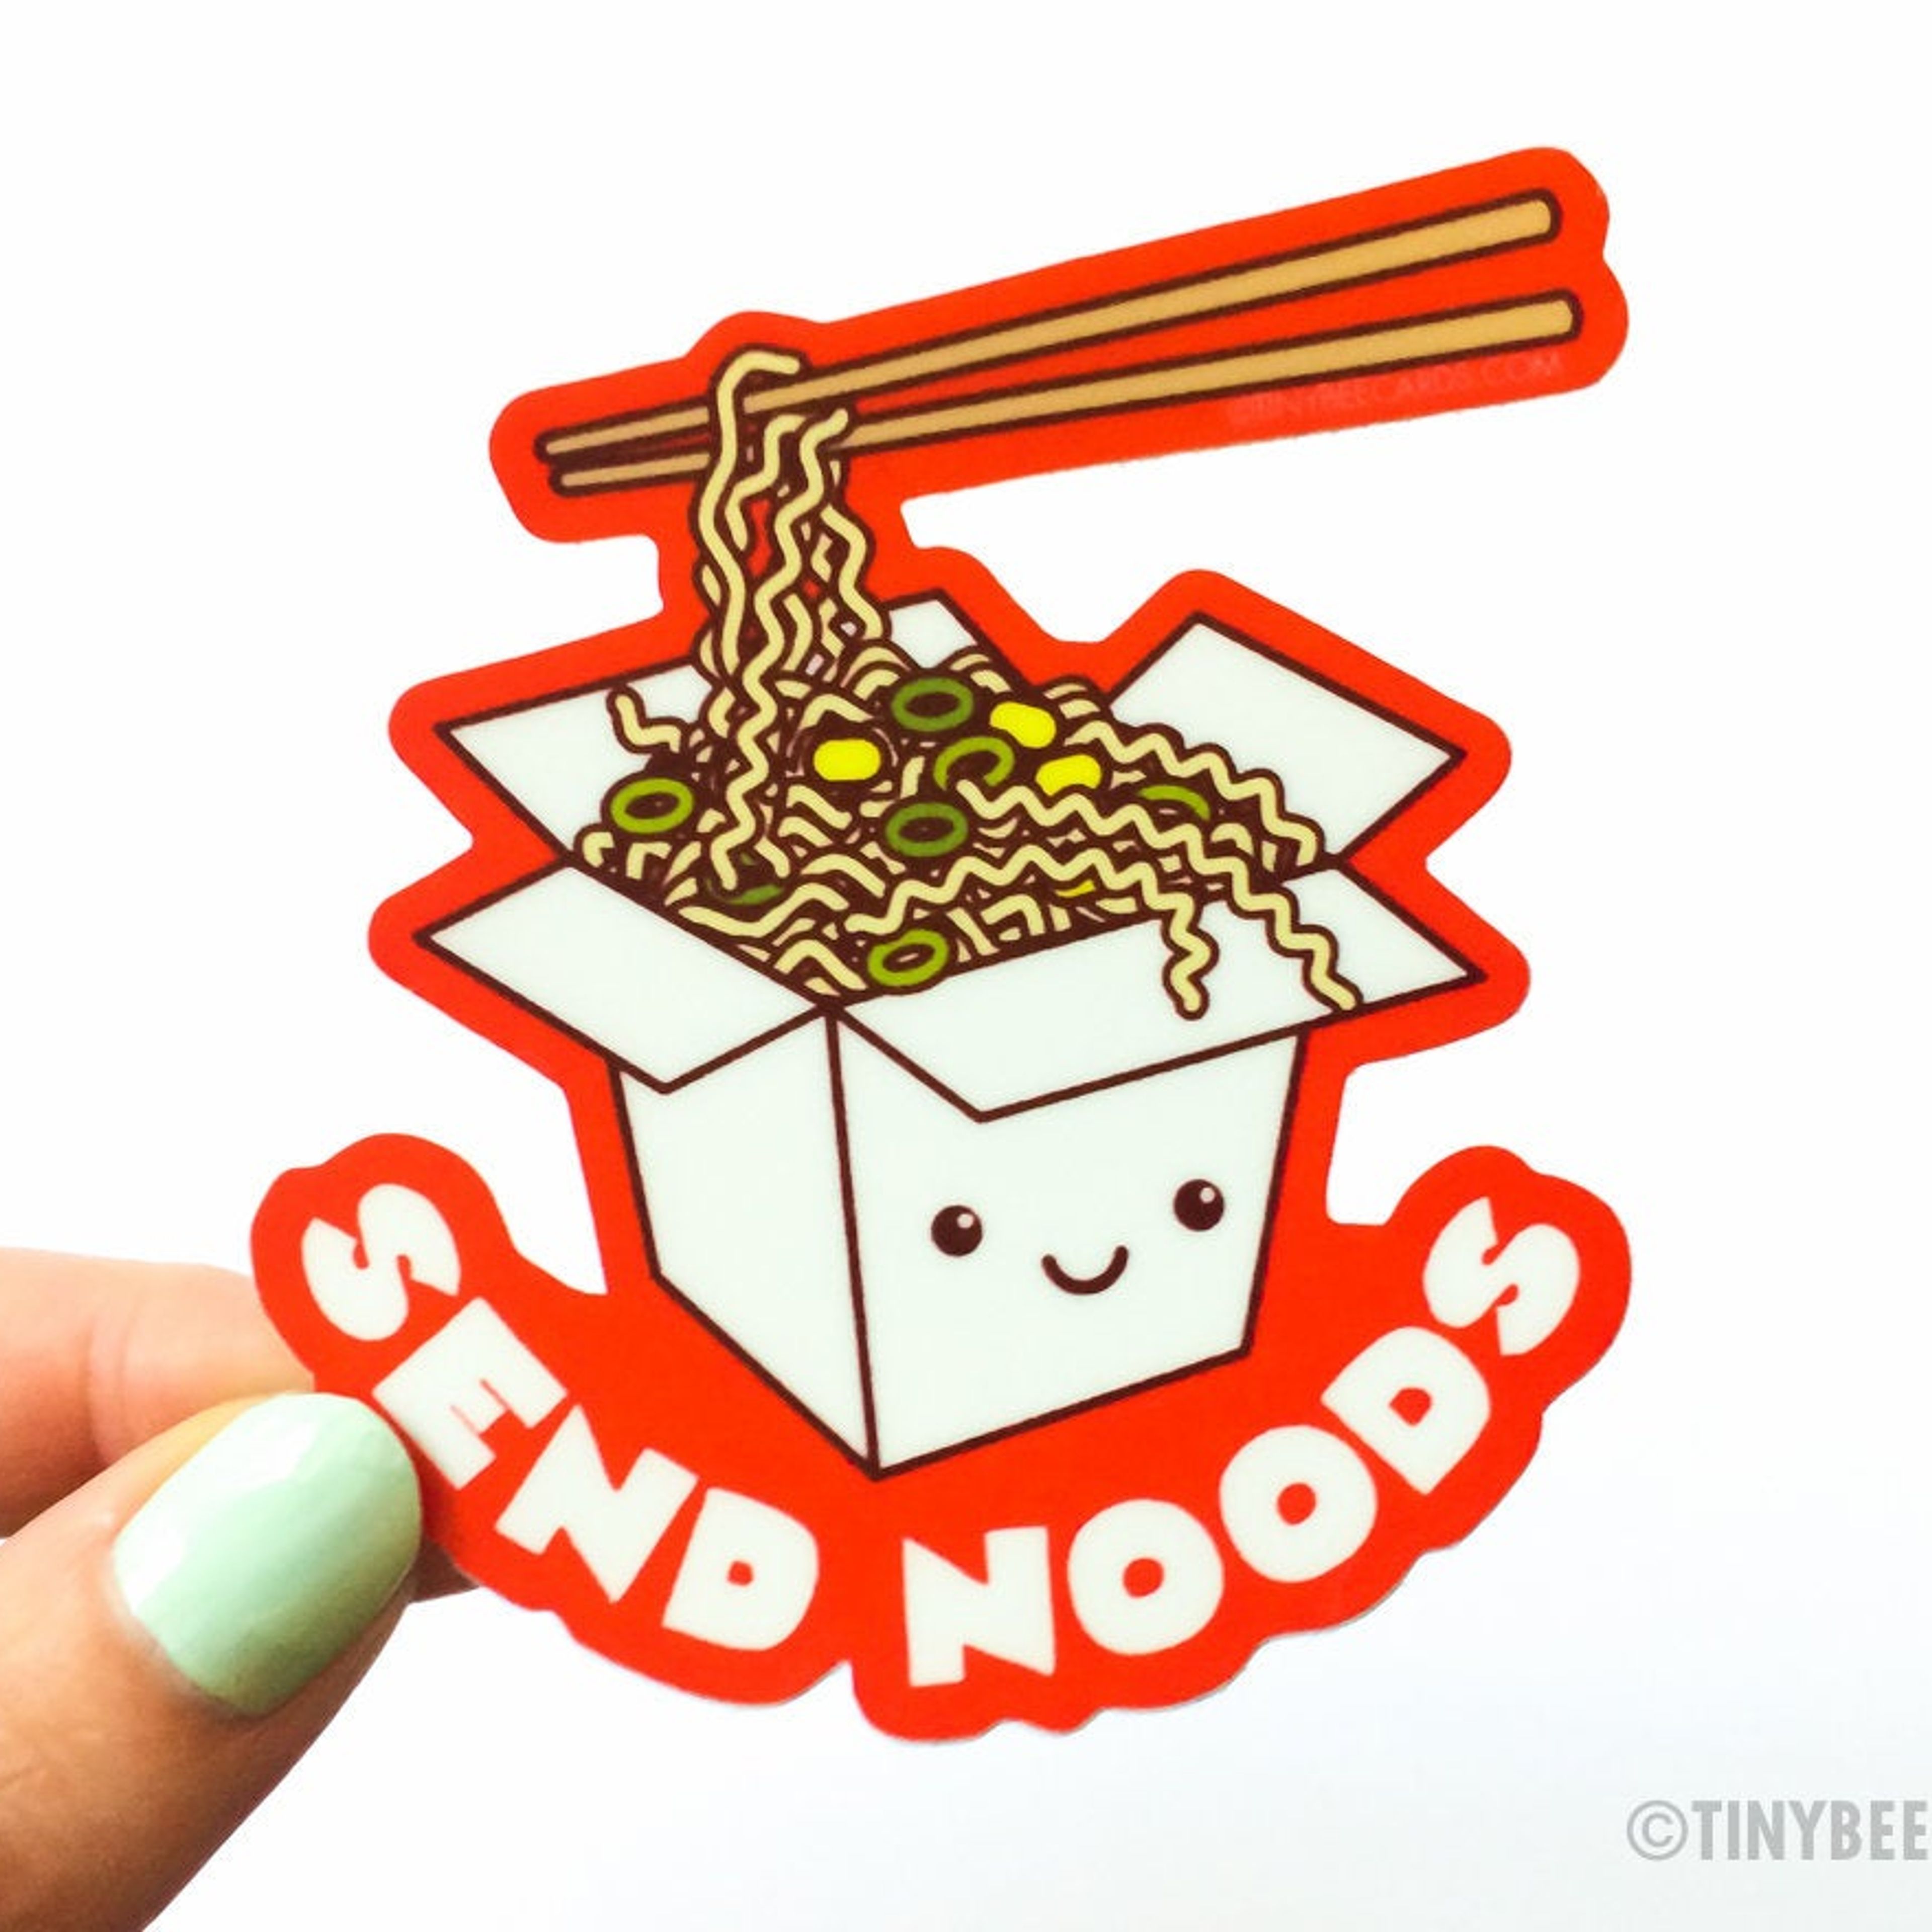 Funny Ramen Noodles Cheeky Rude Vinyl Sticker "Send Noods"